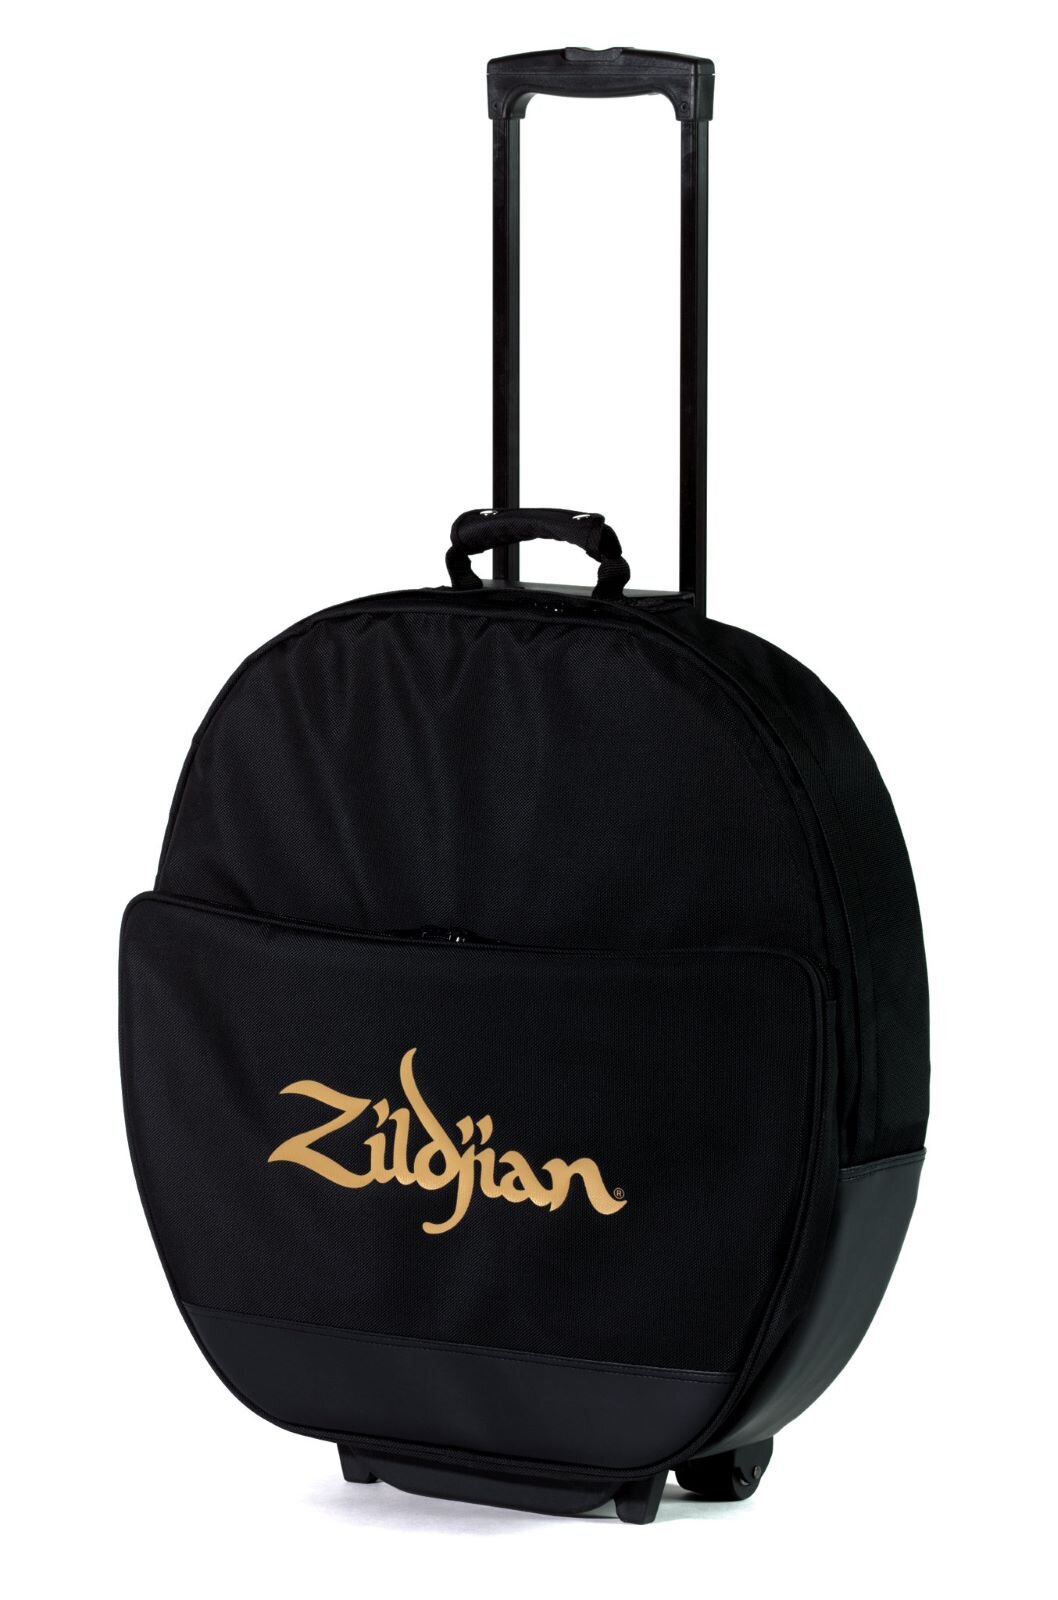 Zildjian DELUXE Cymbal Rollerbag : photo 1